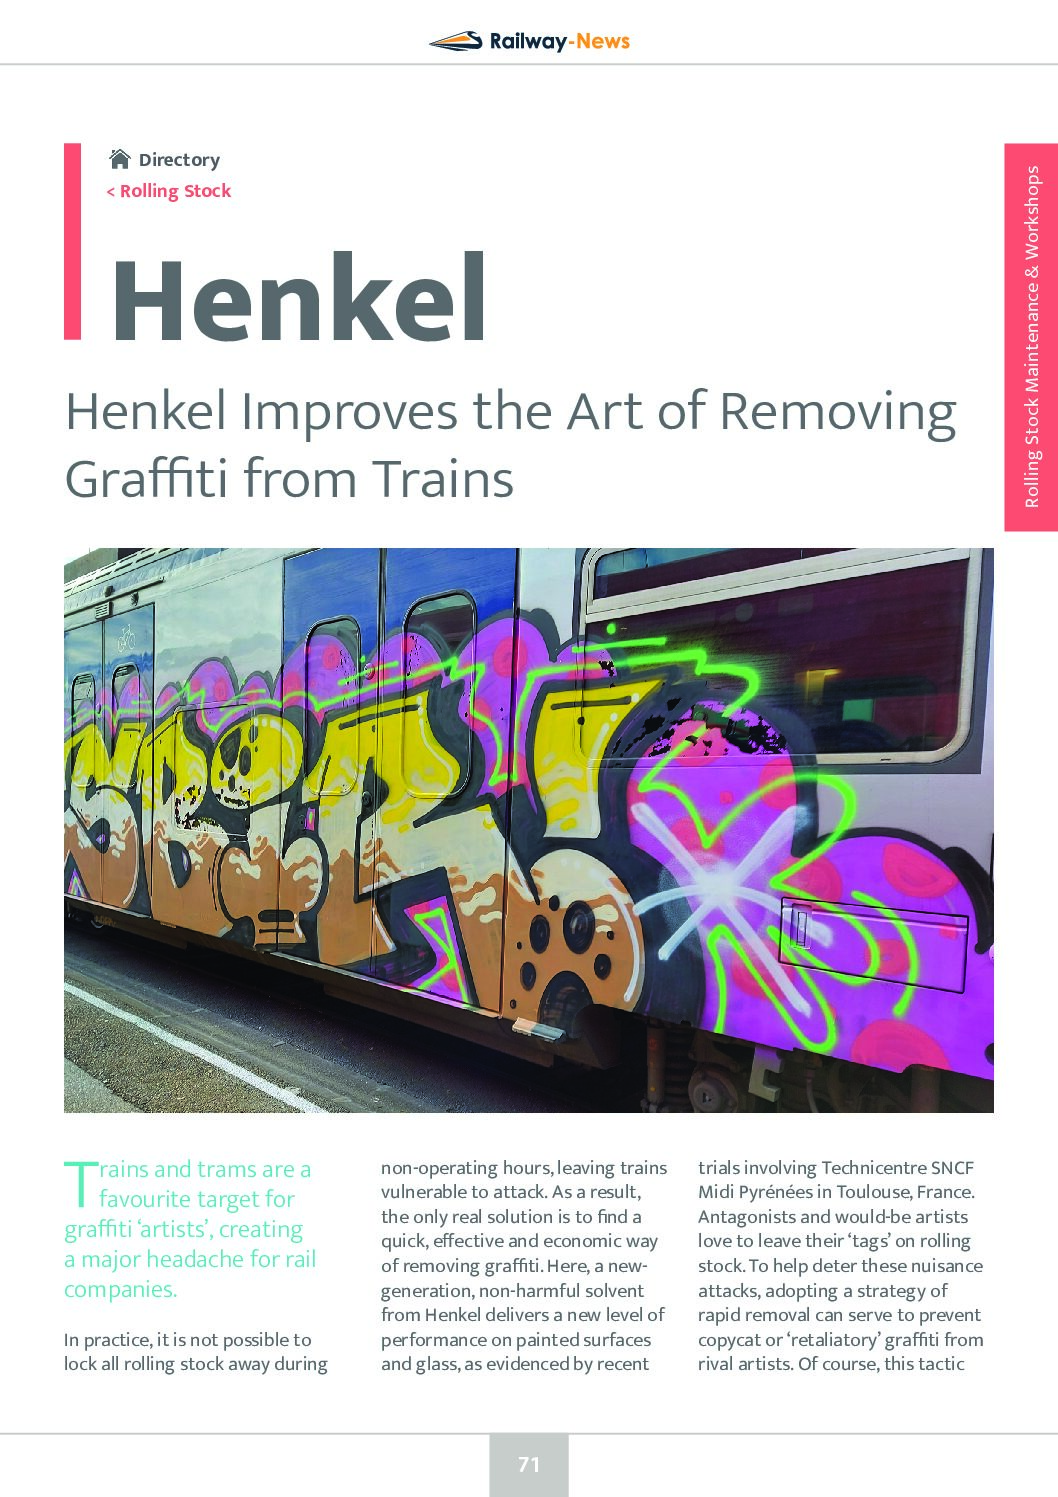 Henkel Improves the Art of Removing Graffiti from Trains